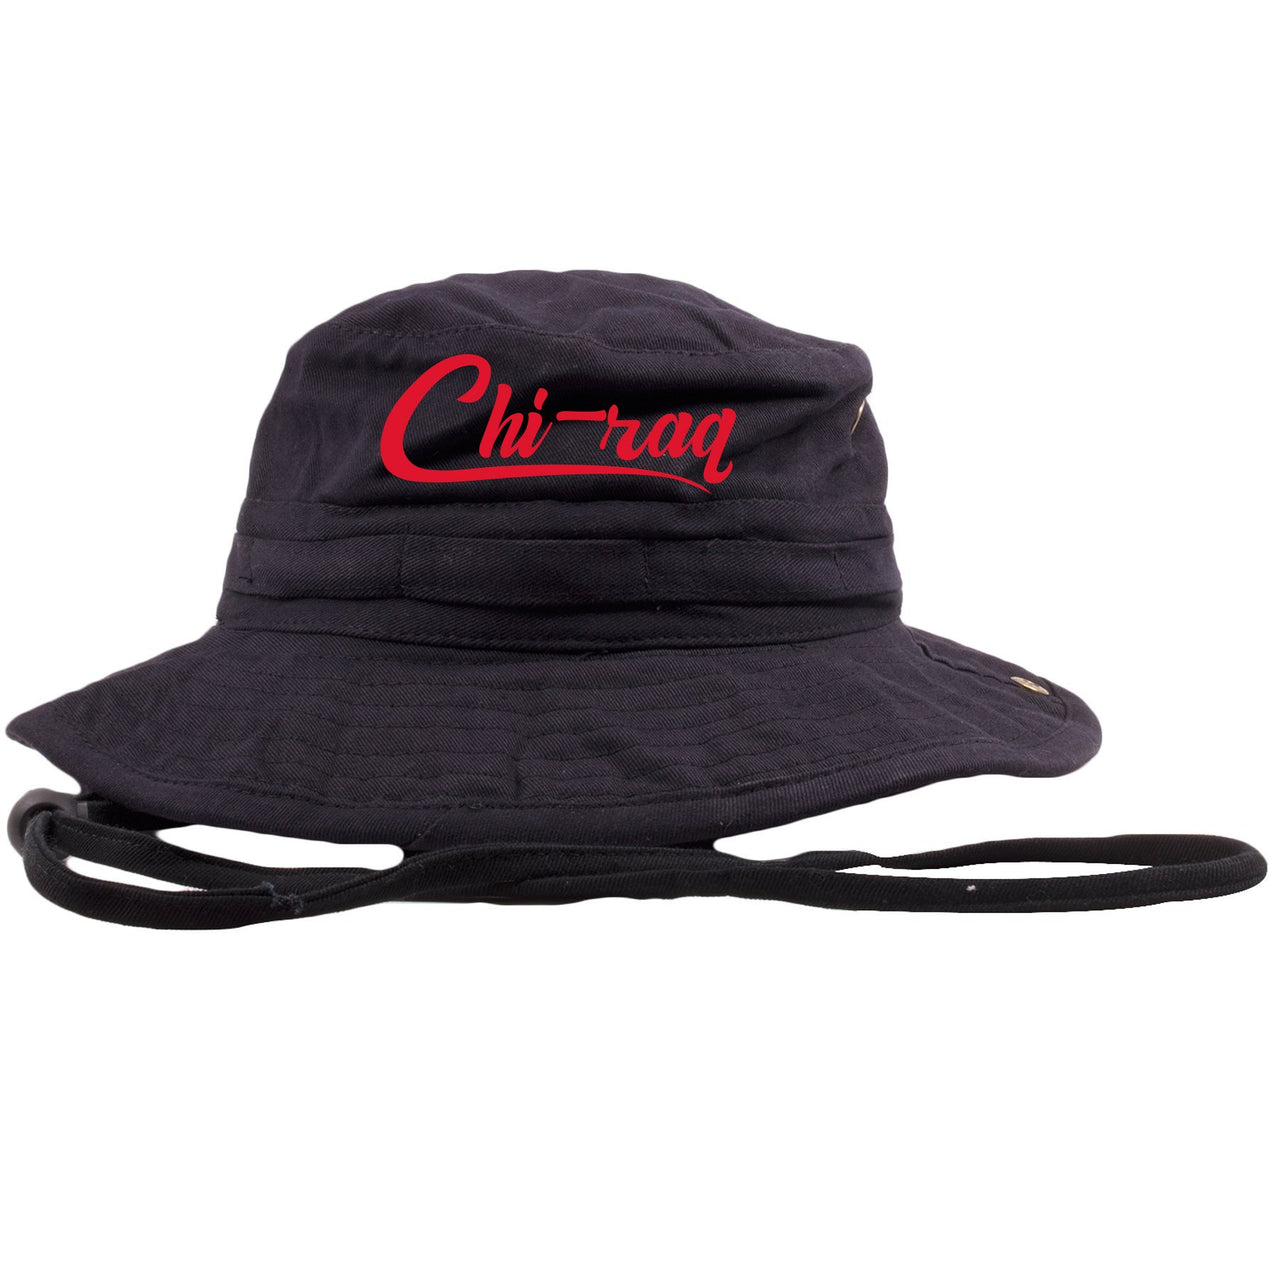 Bred 2019 4s Bucket Hat | Chiraq, Black